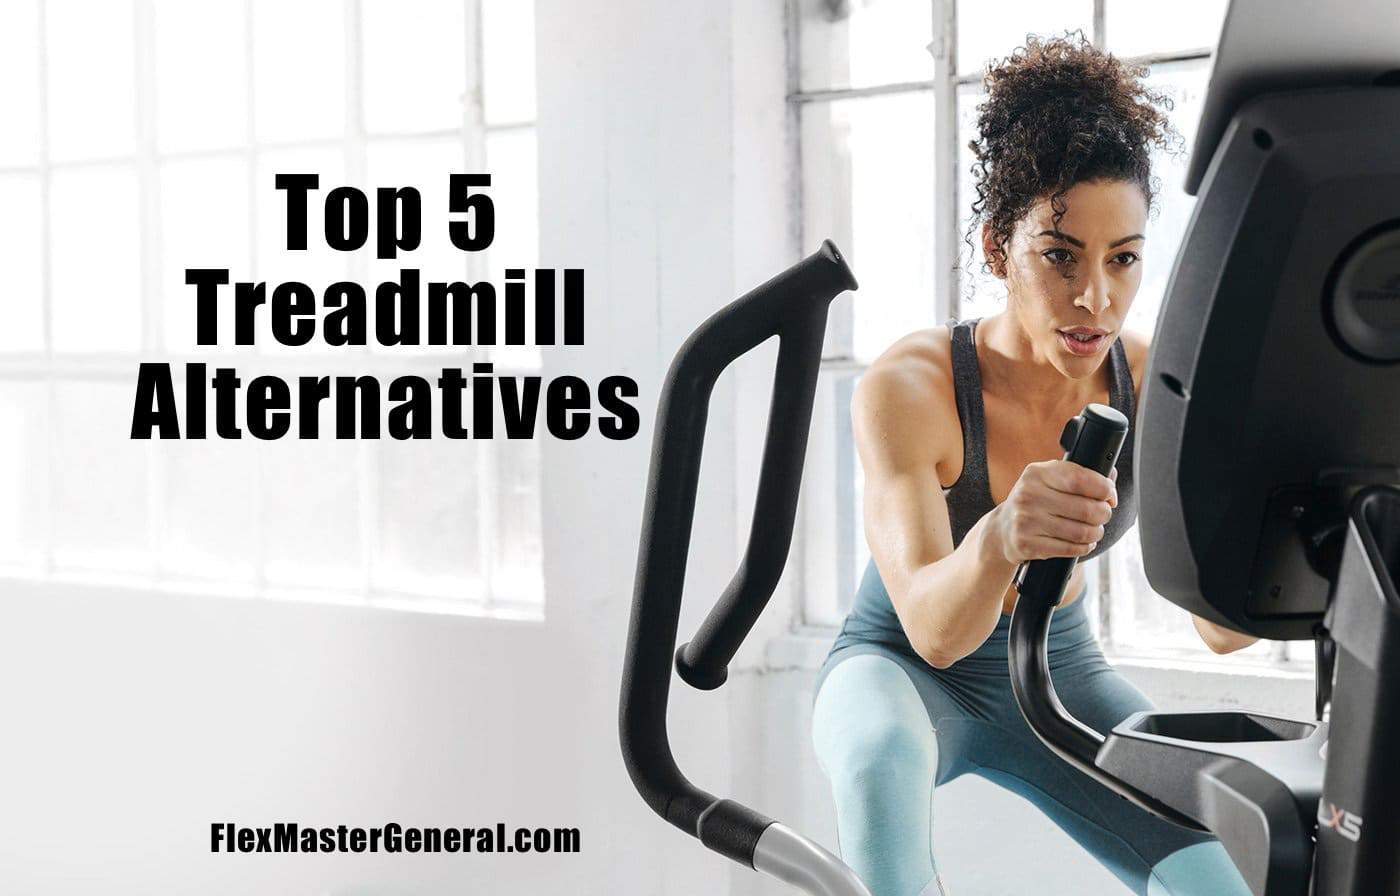 Best Treadmill Alternatives: Top 5 Low-Impact Options